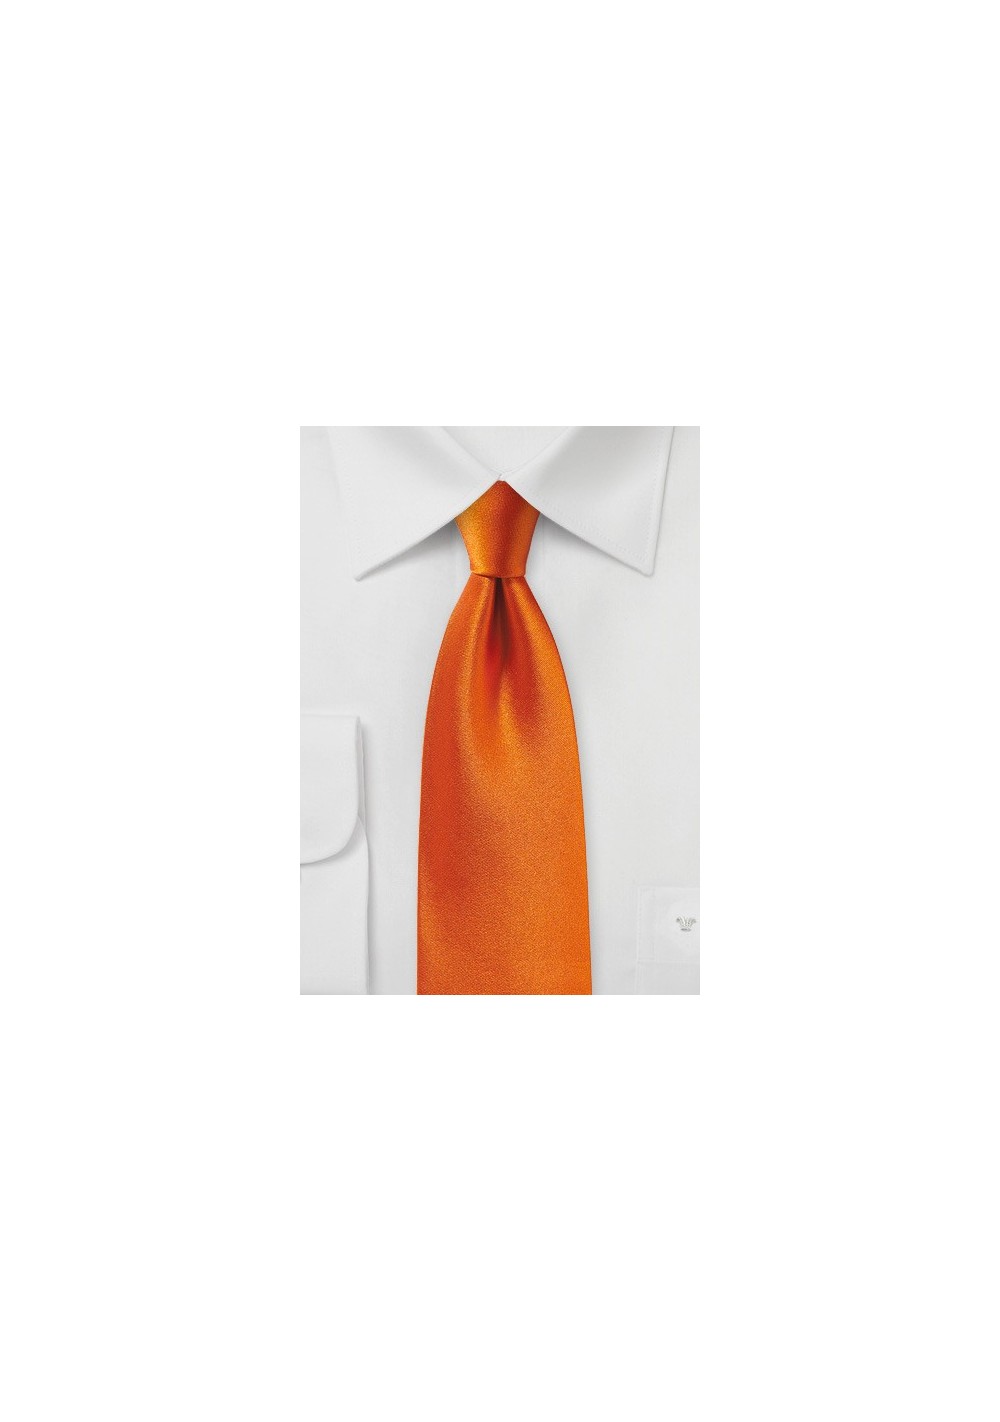 Persimmon Orange Satin Silk Tie